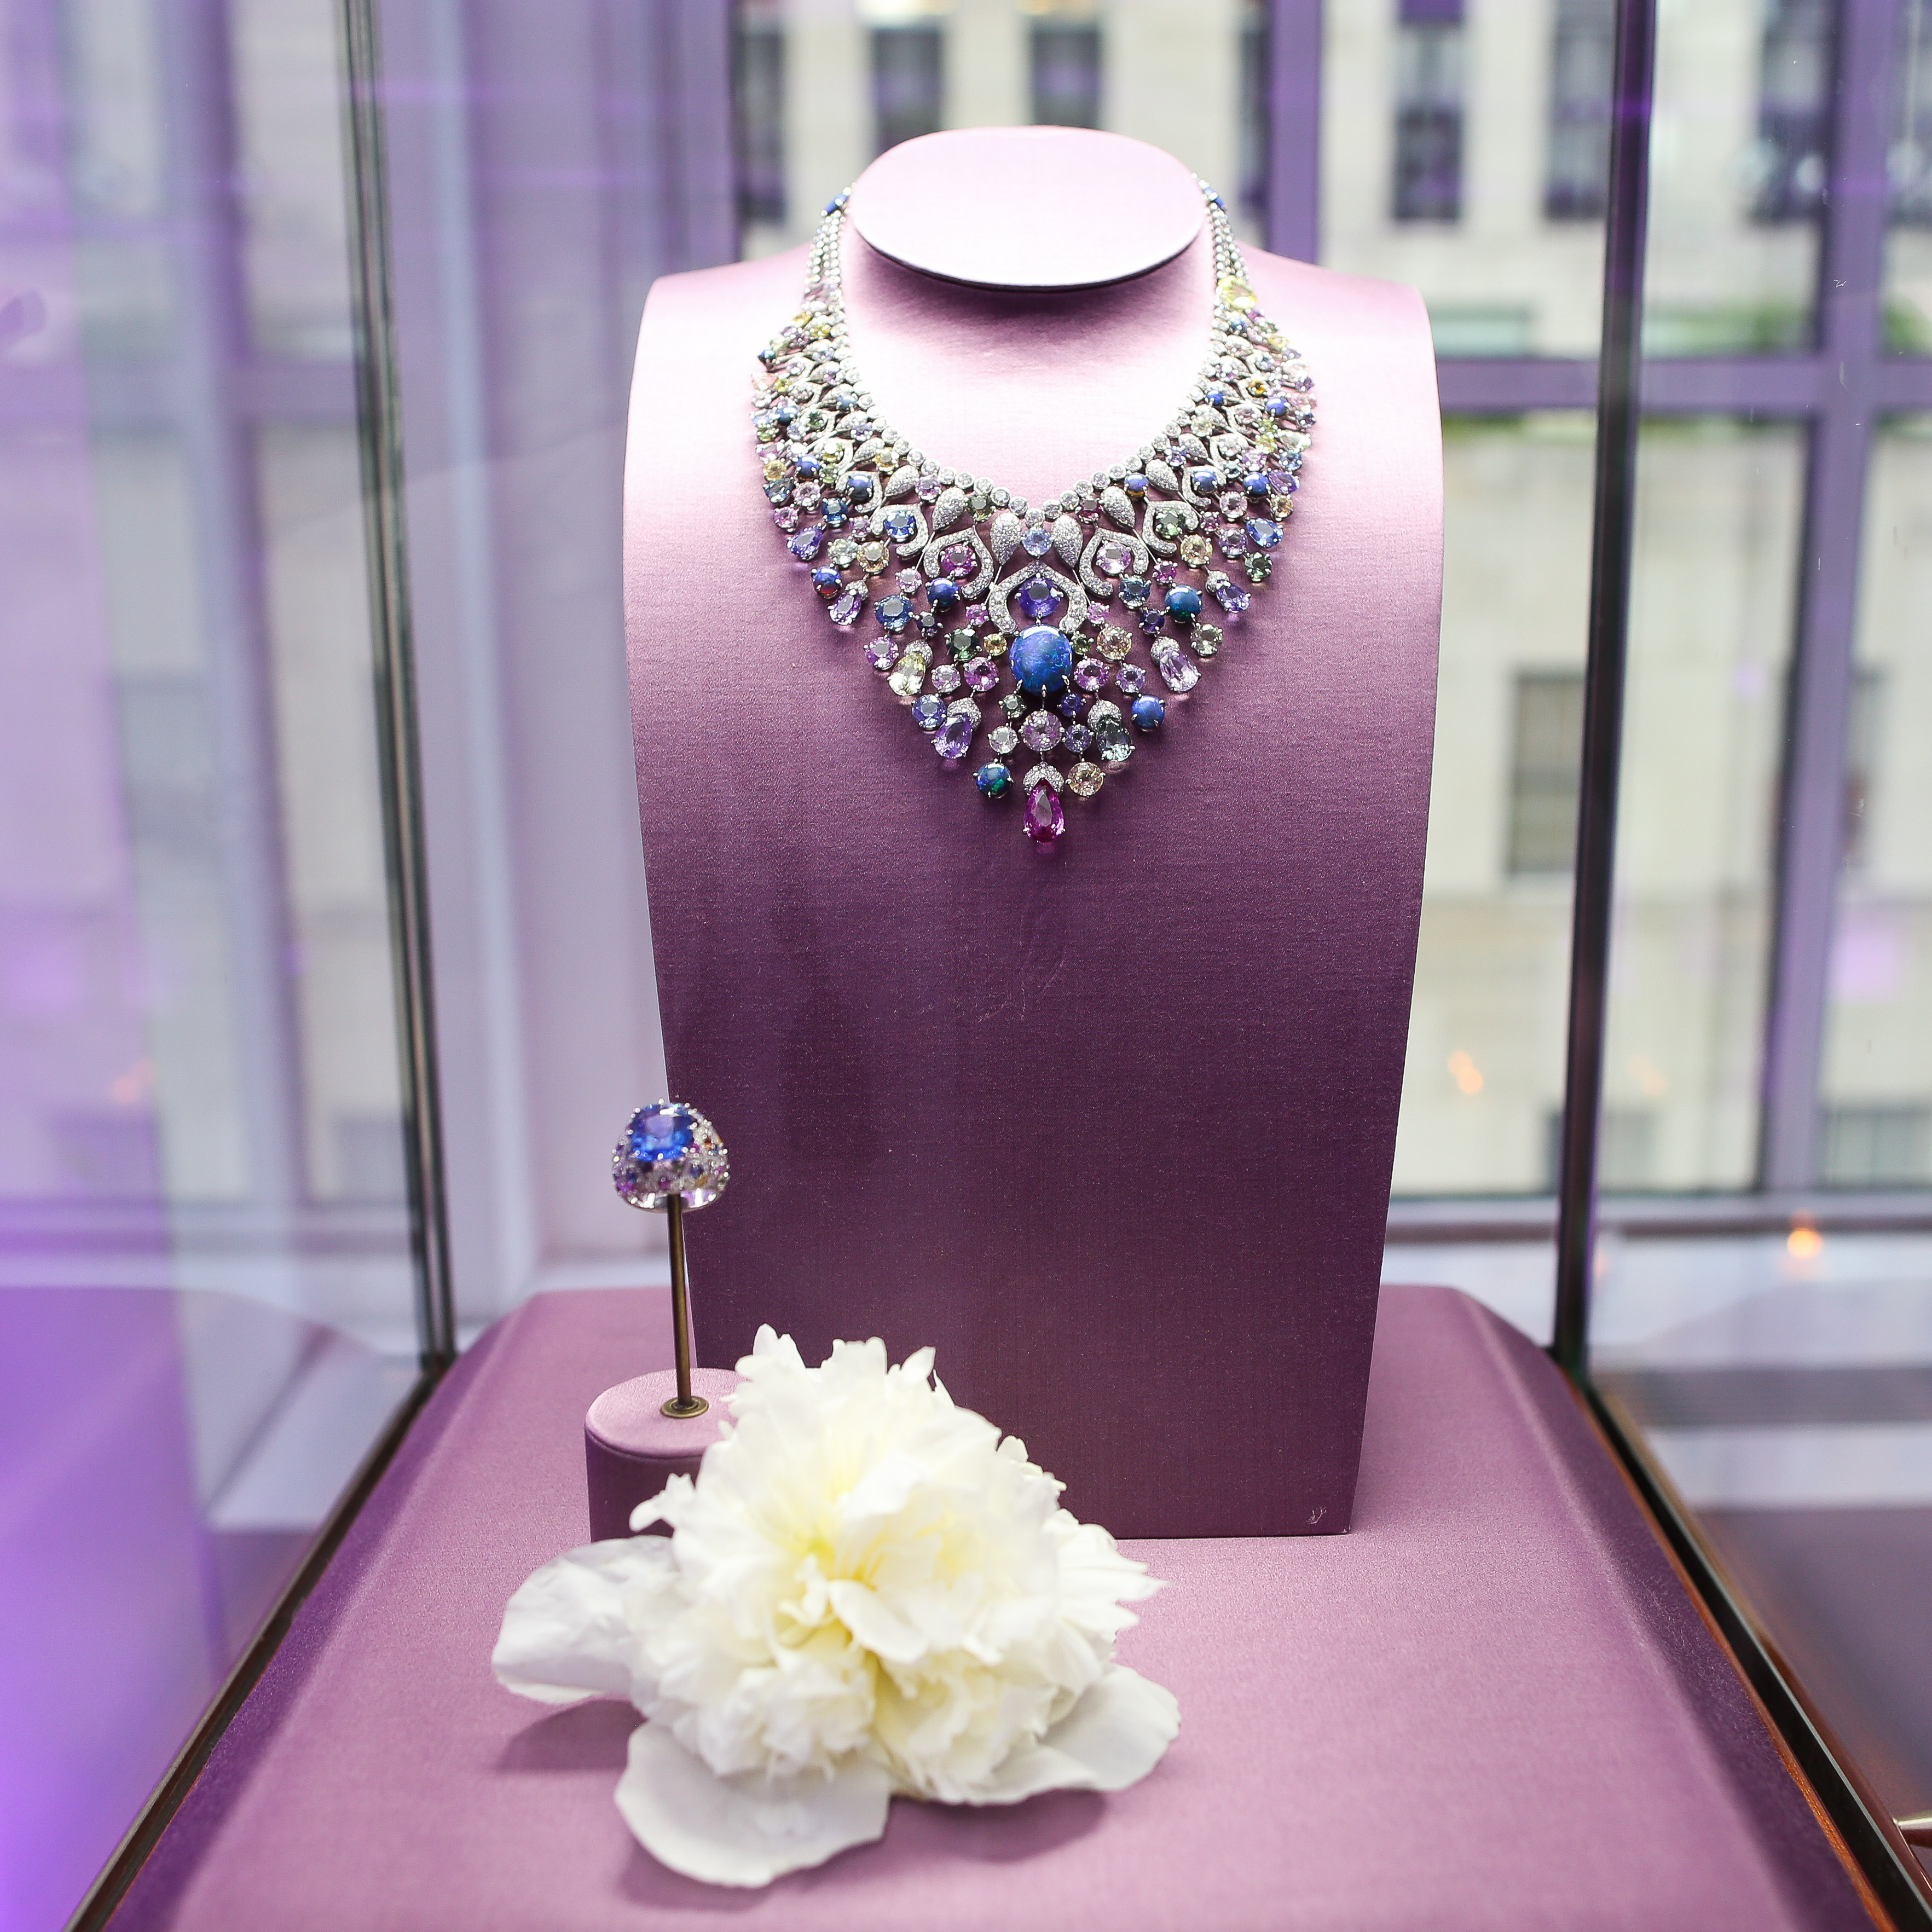 Fabergé opens flagship store